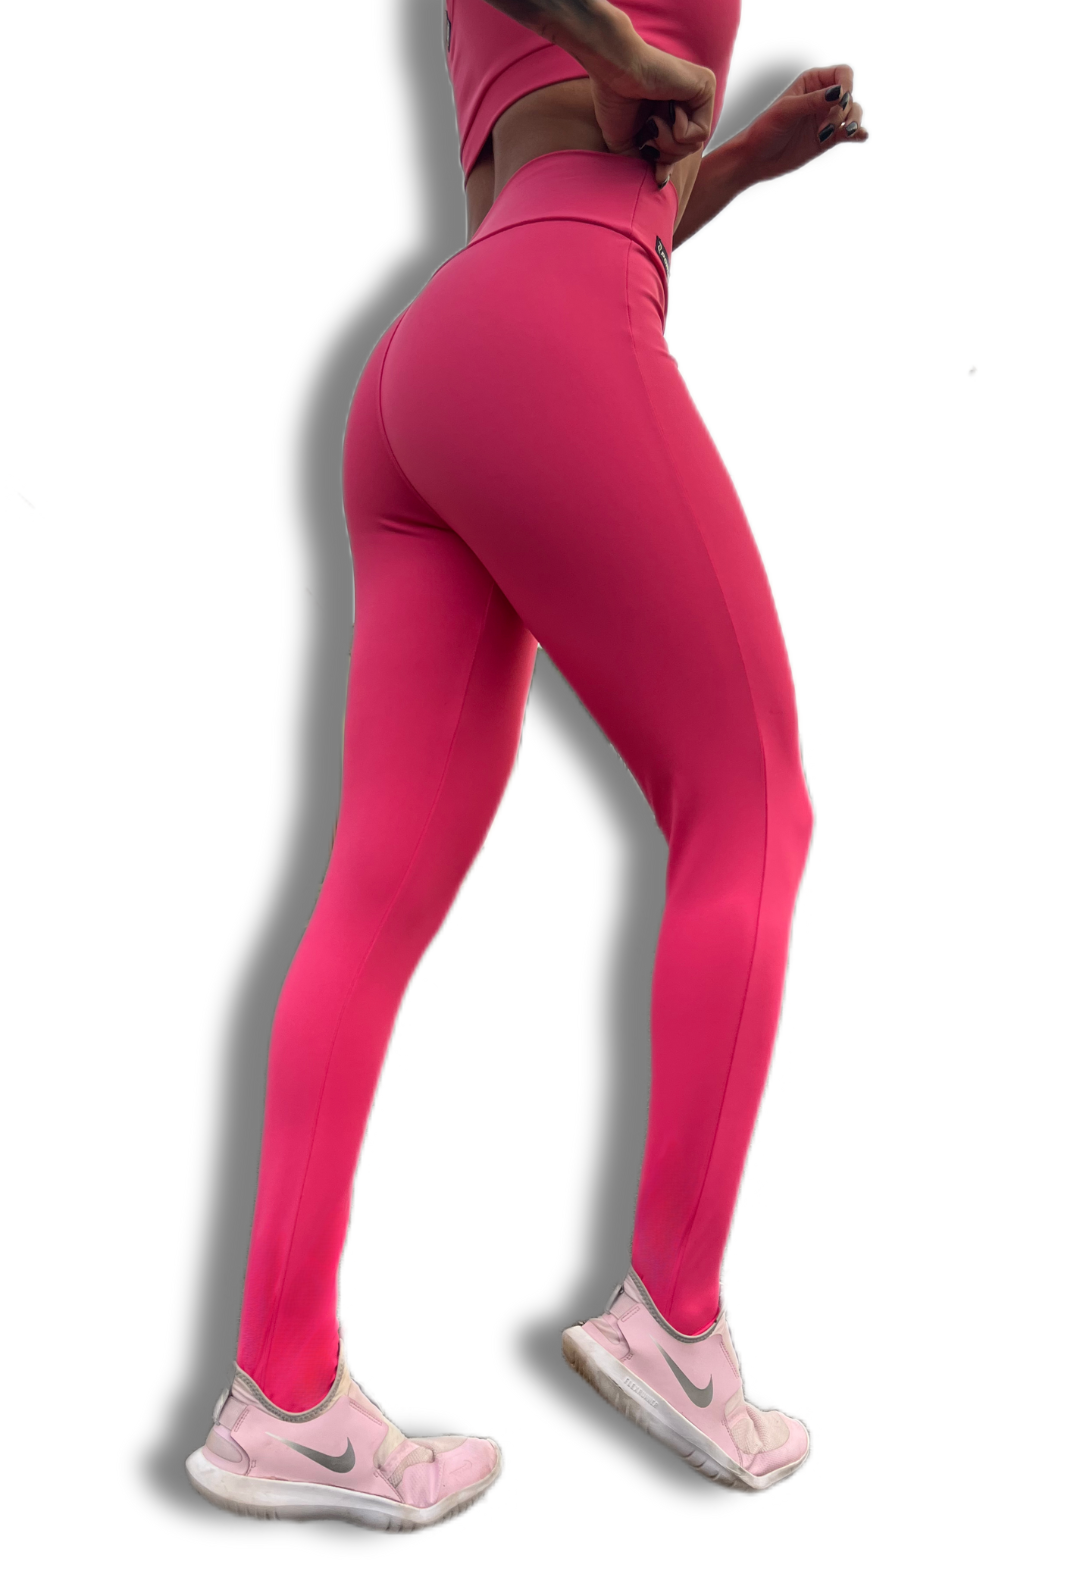 Legging Academia Fitness Colorida (Rosa/Pink) Mega Promoção!!!